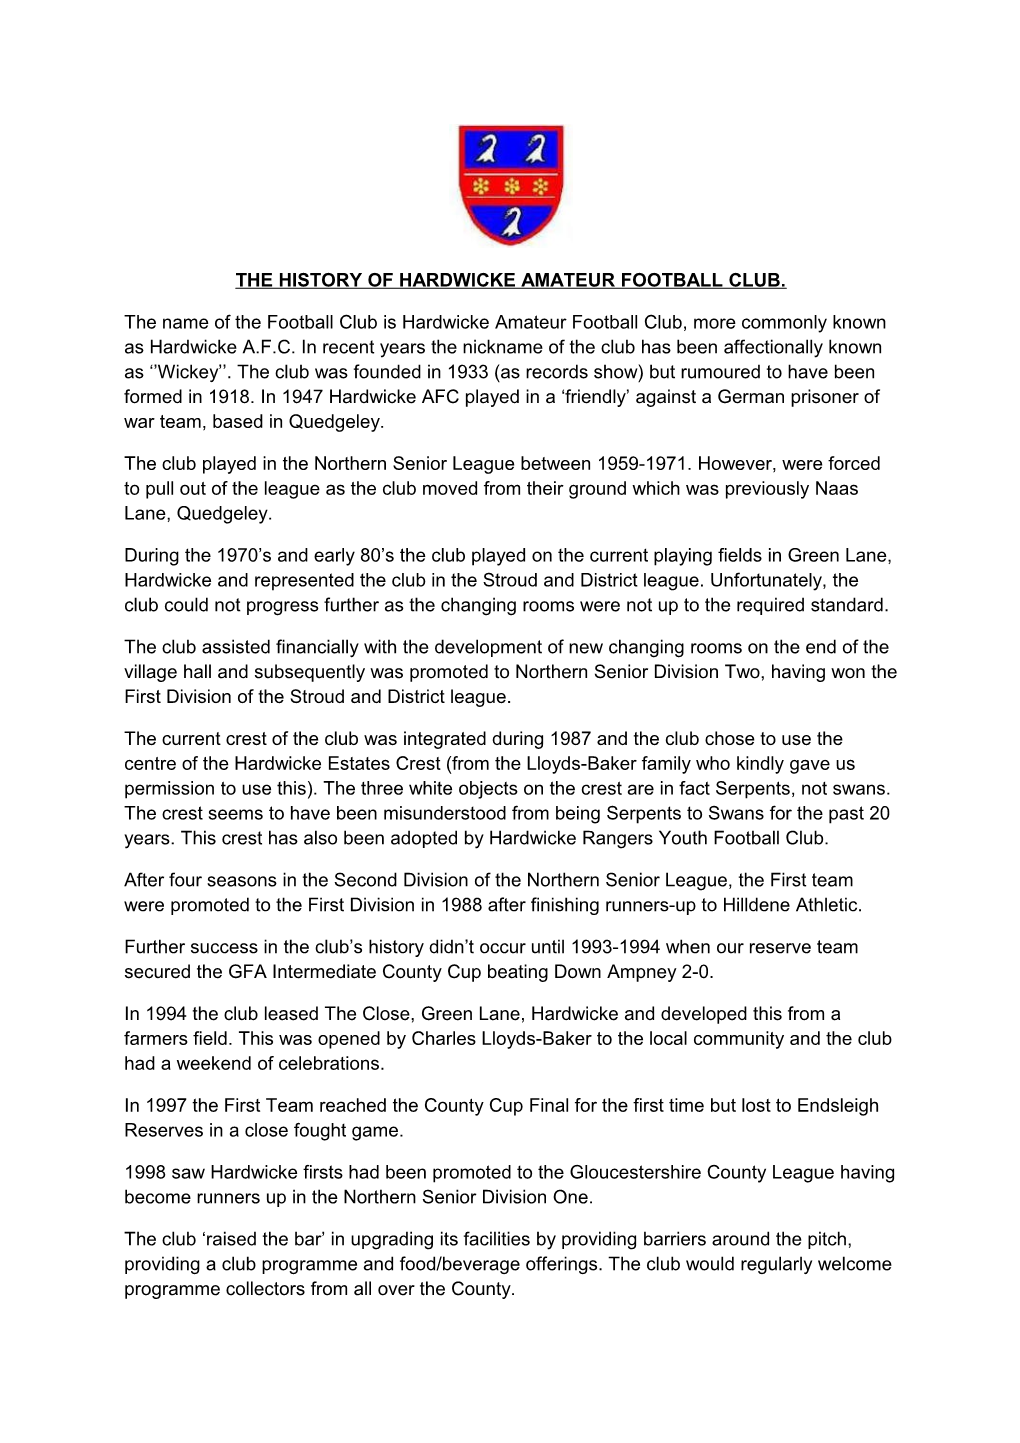 The History of Hardwicke Amateur Football Club